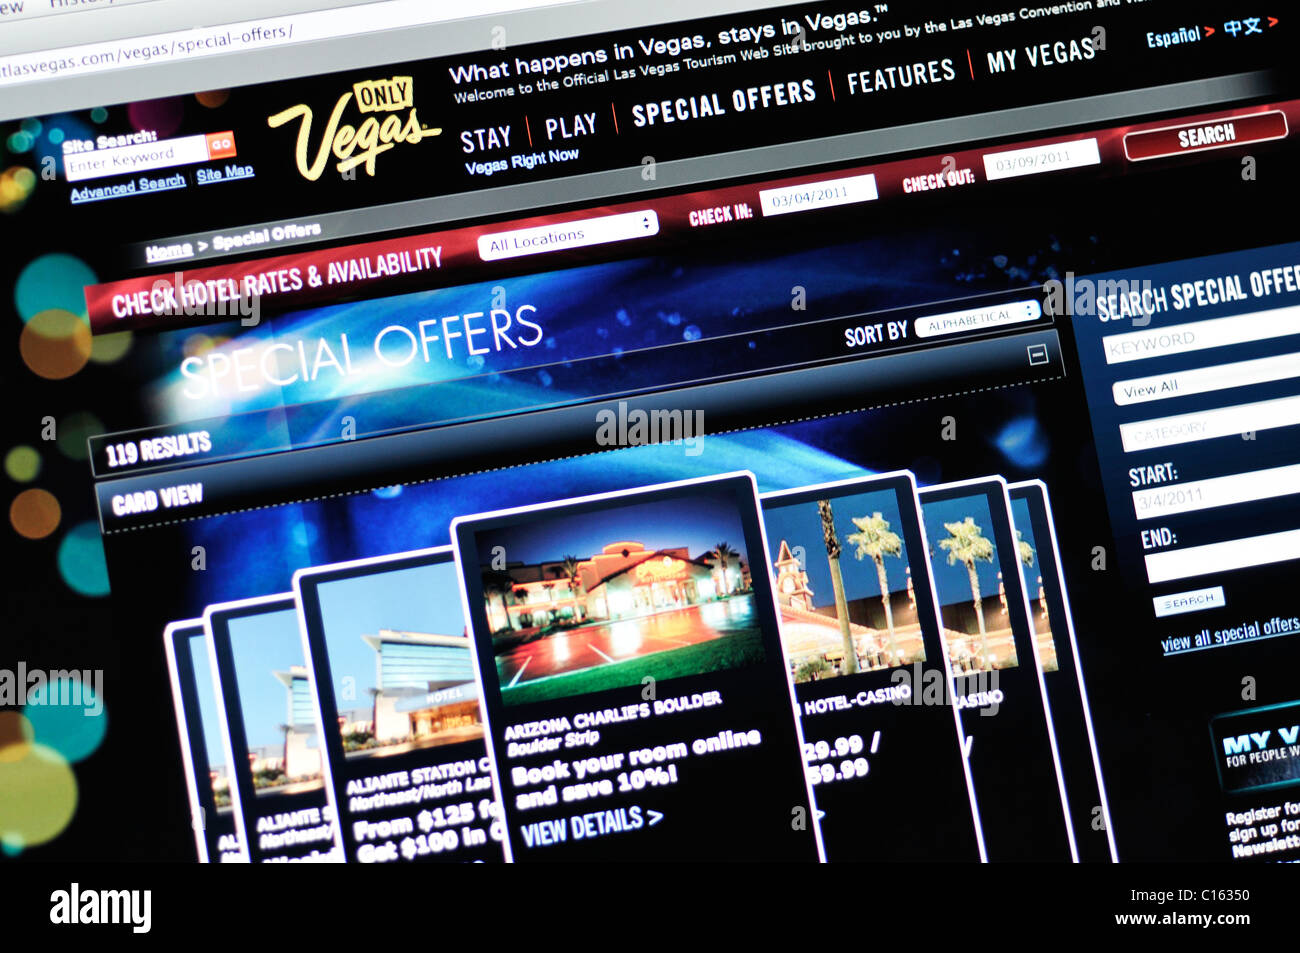 Las Vegas-offizielle Tourismus-website Stockfoto